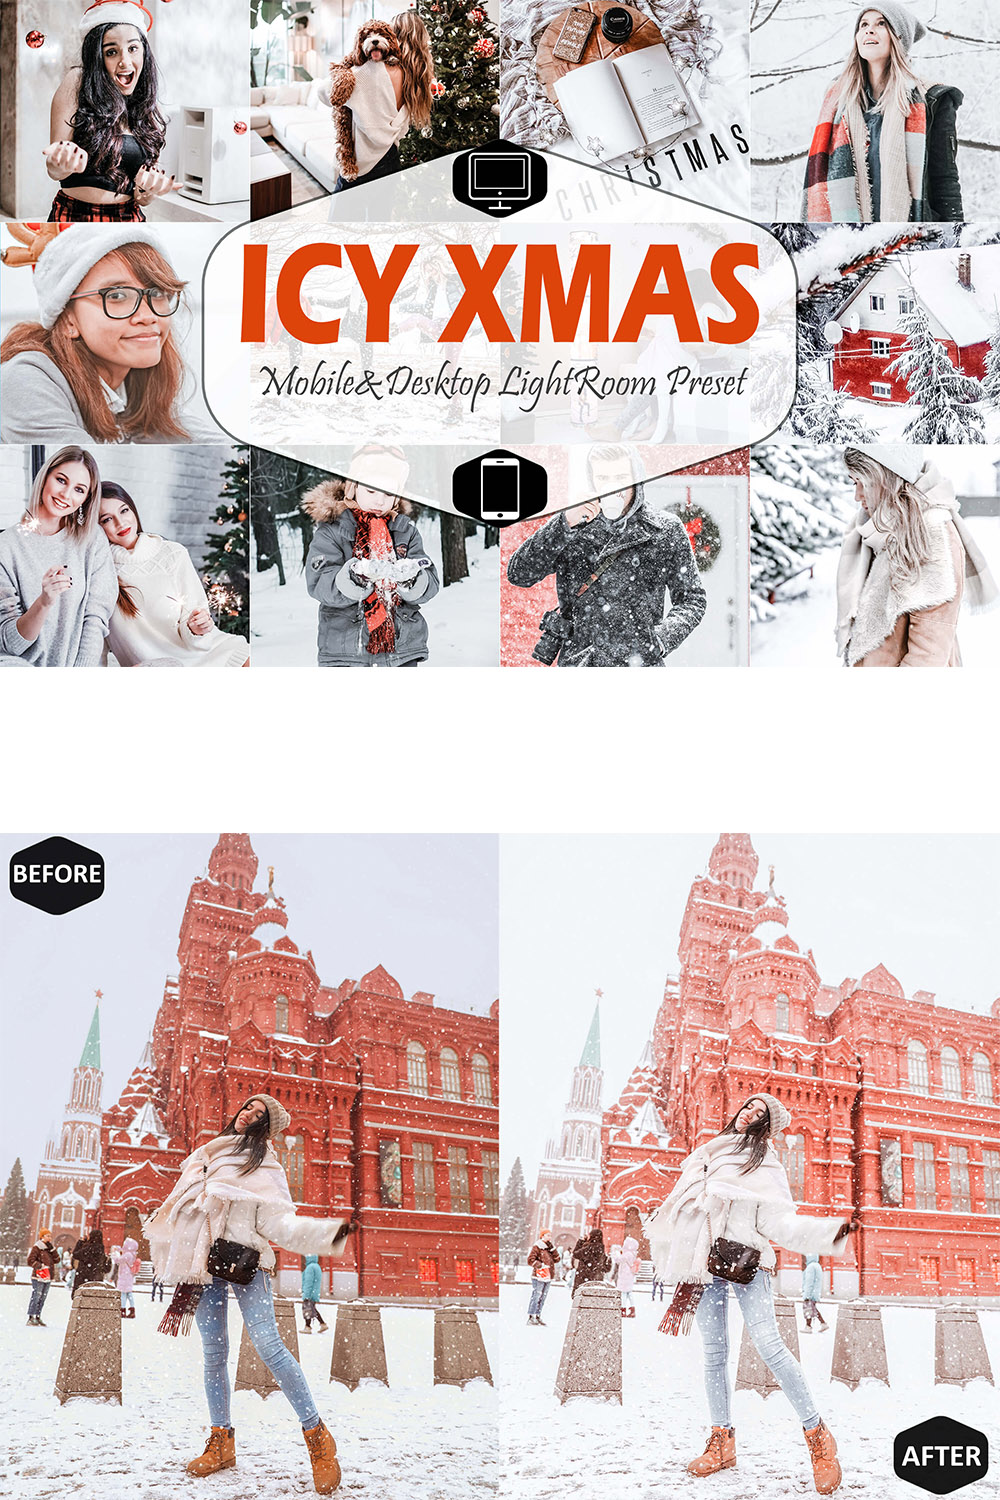 Icy Xmas Mobile & Desktop Lightroom Presets, instagram modern LR preset, trendy filter, Blogger DNG travel lifestyle fashion theme pinterest preview image.